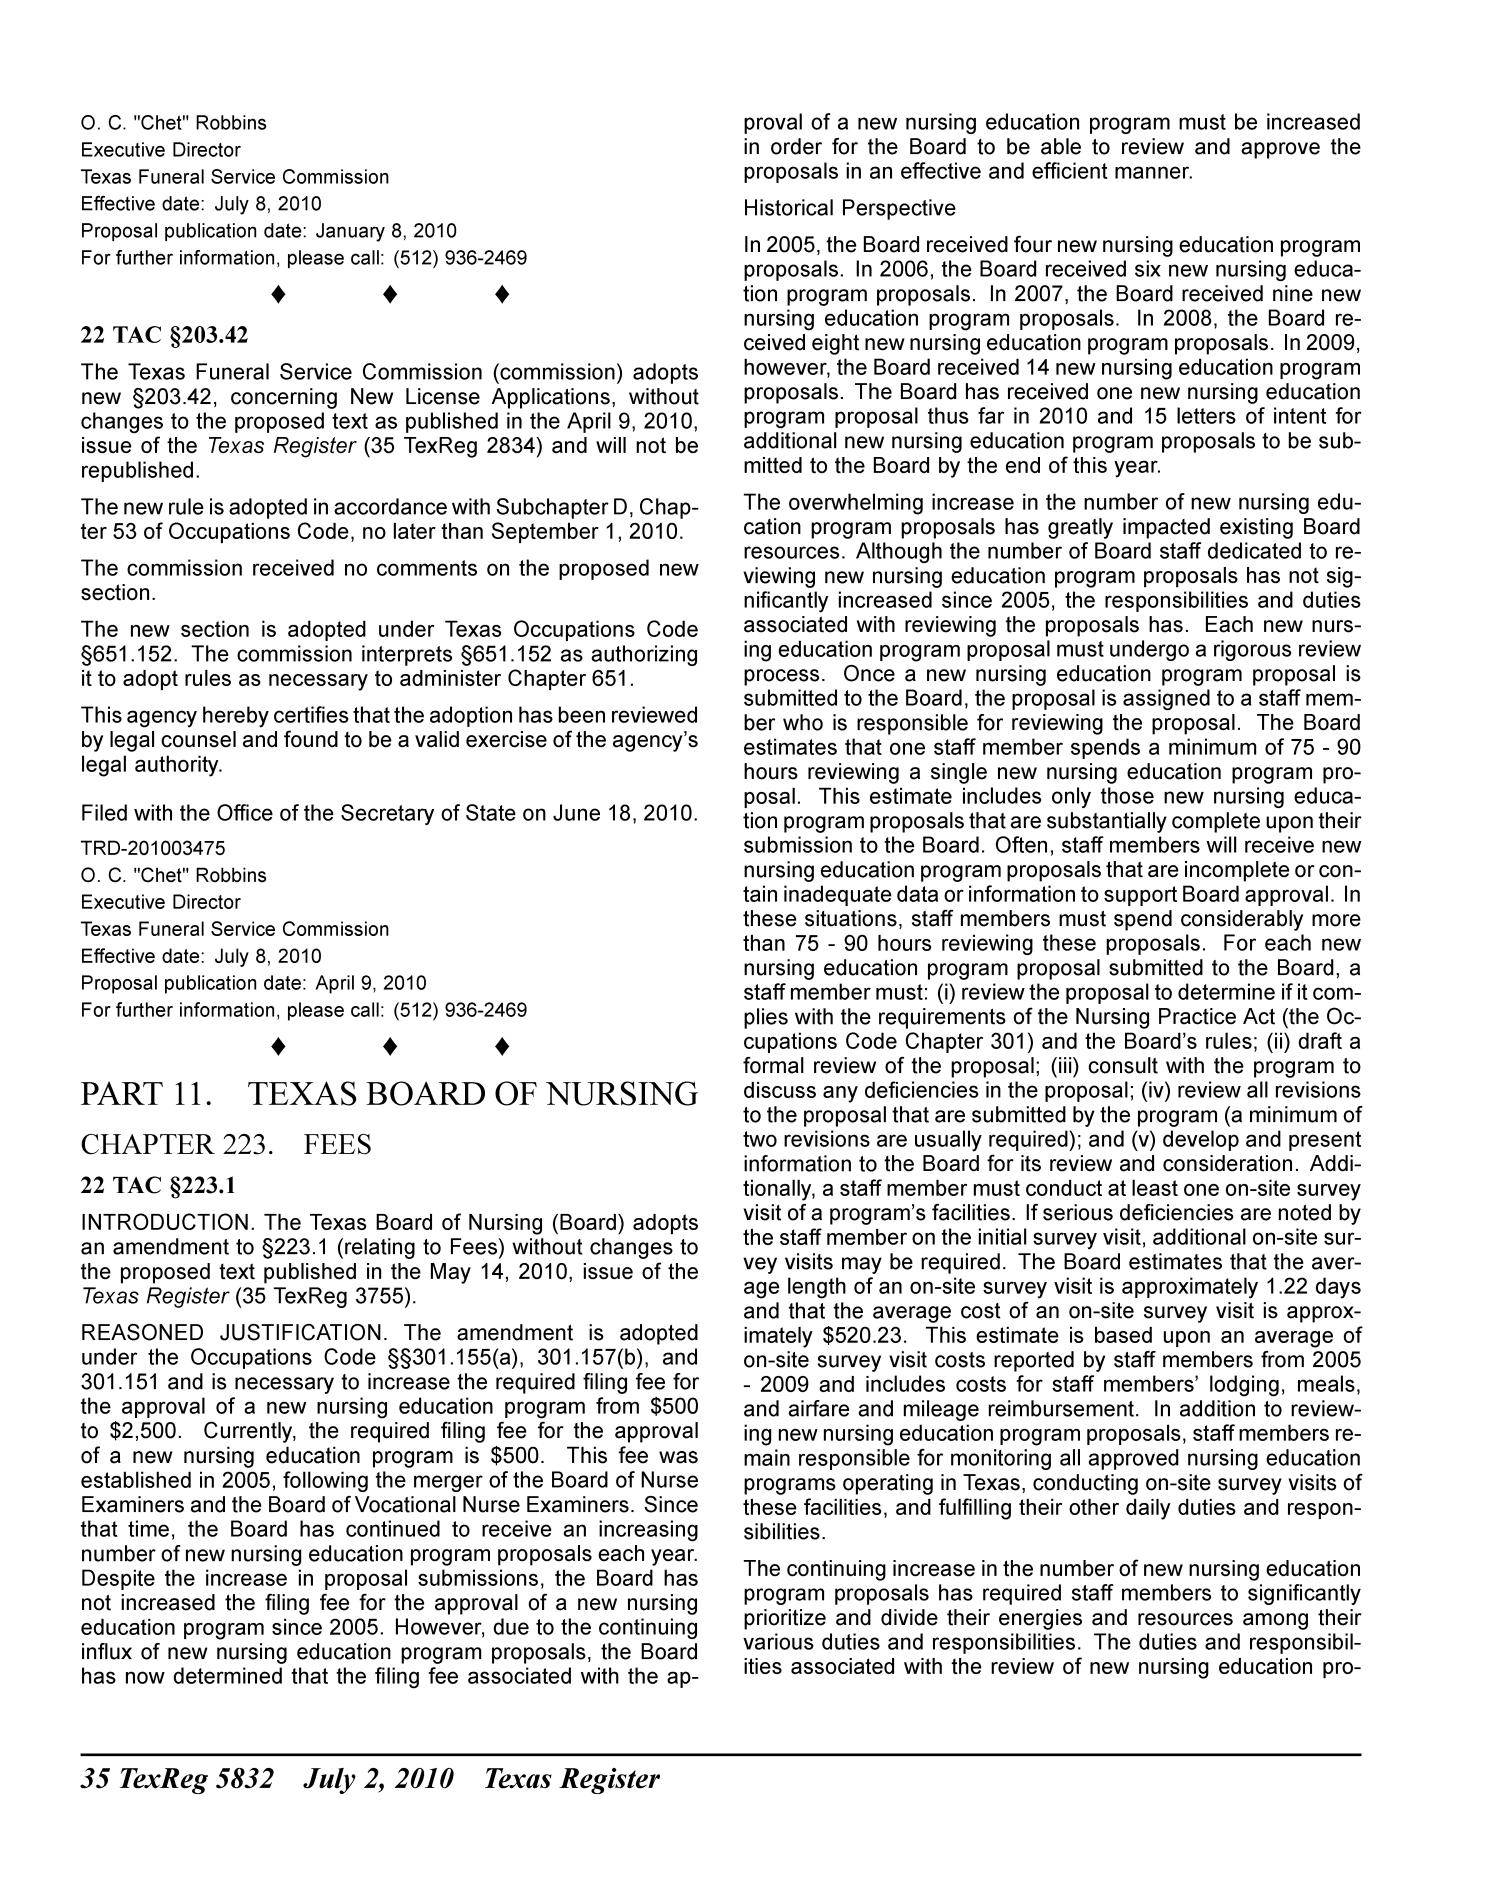 Texas Register, Volume 35, Number 27, Pages 5625-5980, July 2, 2010
                                                
                                                    5832
                                                